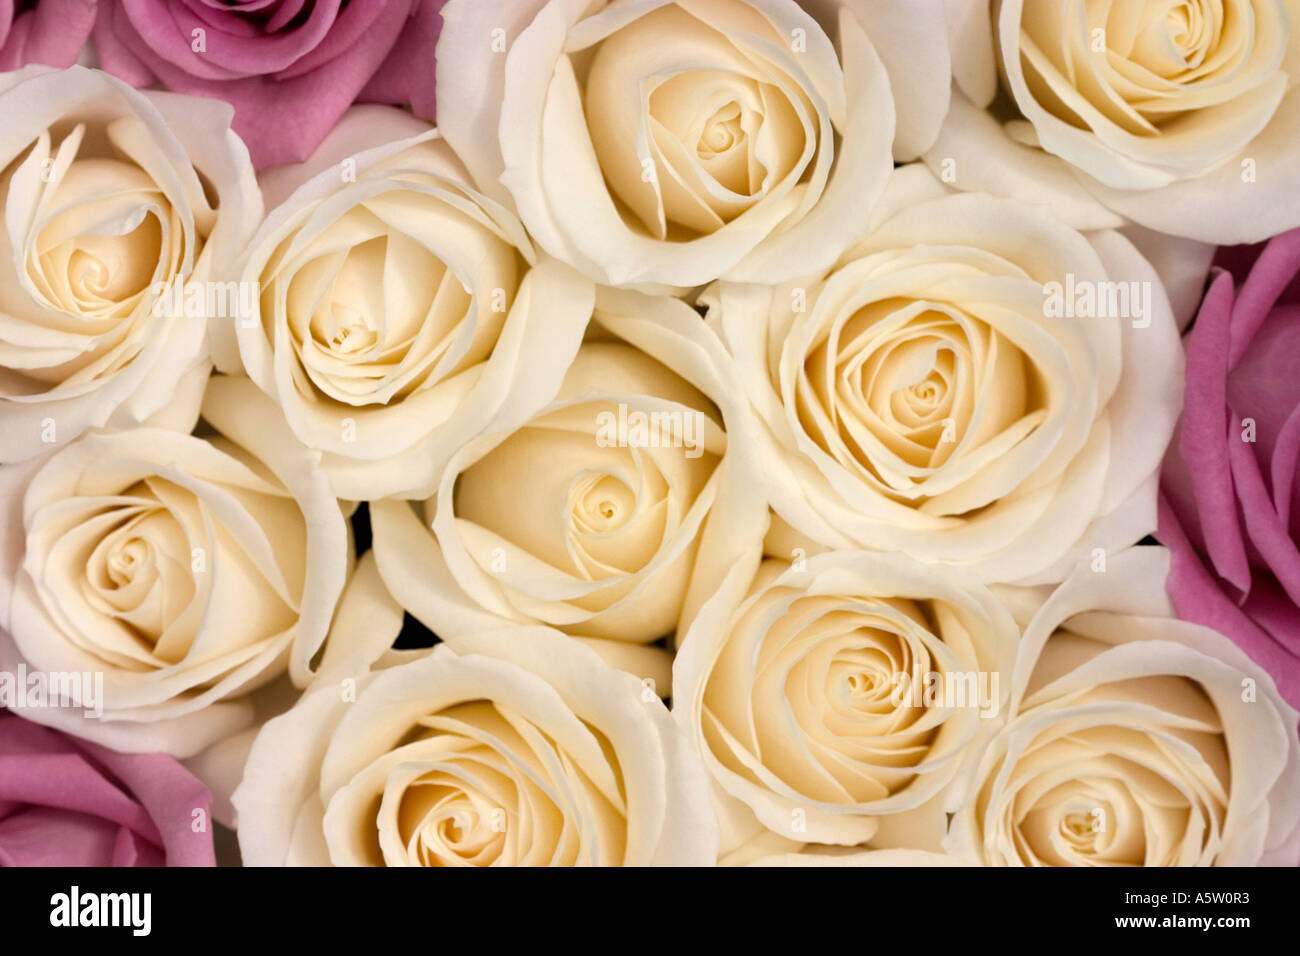 Full frame shot of beutiful roses. Stock Photo